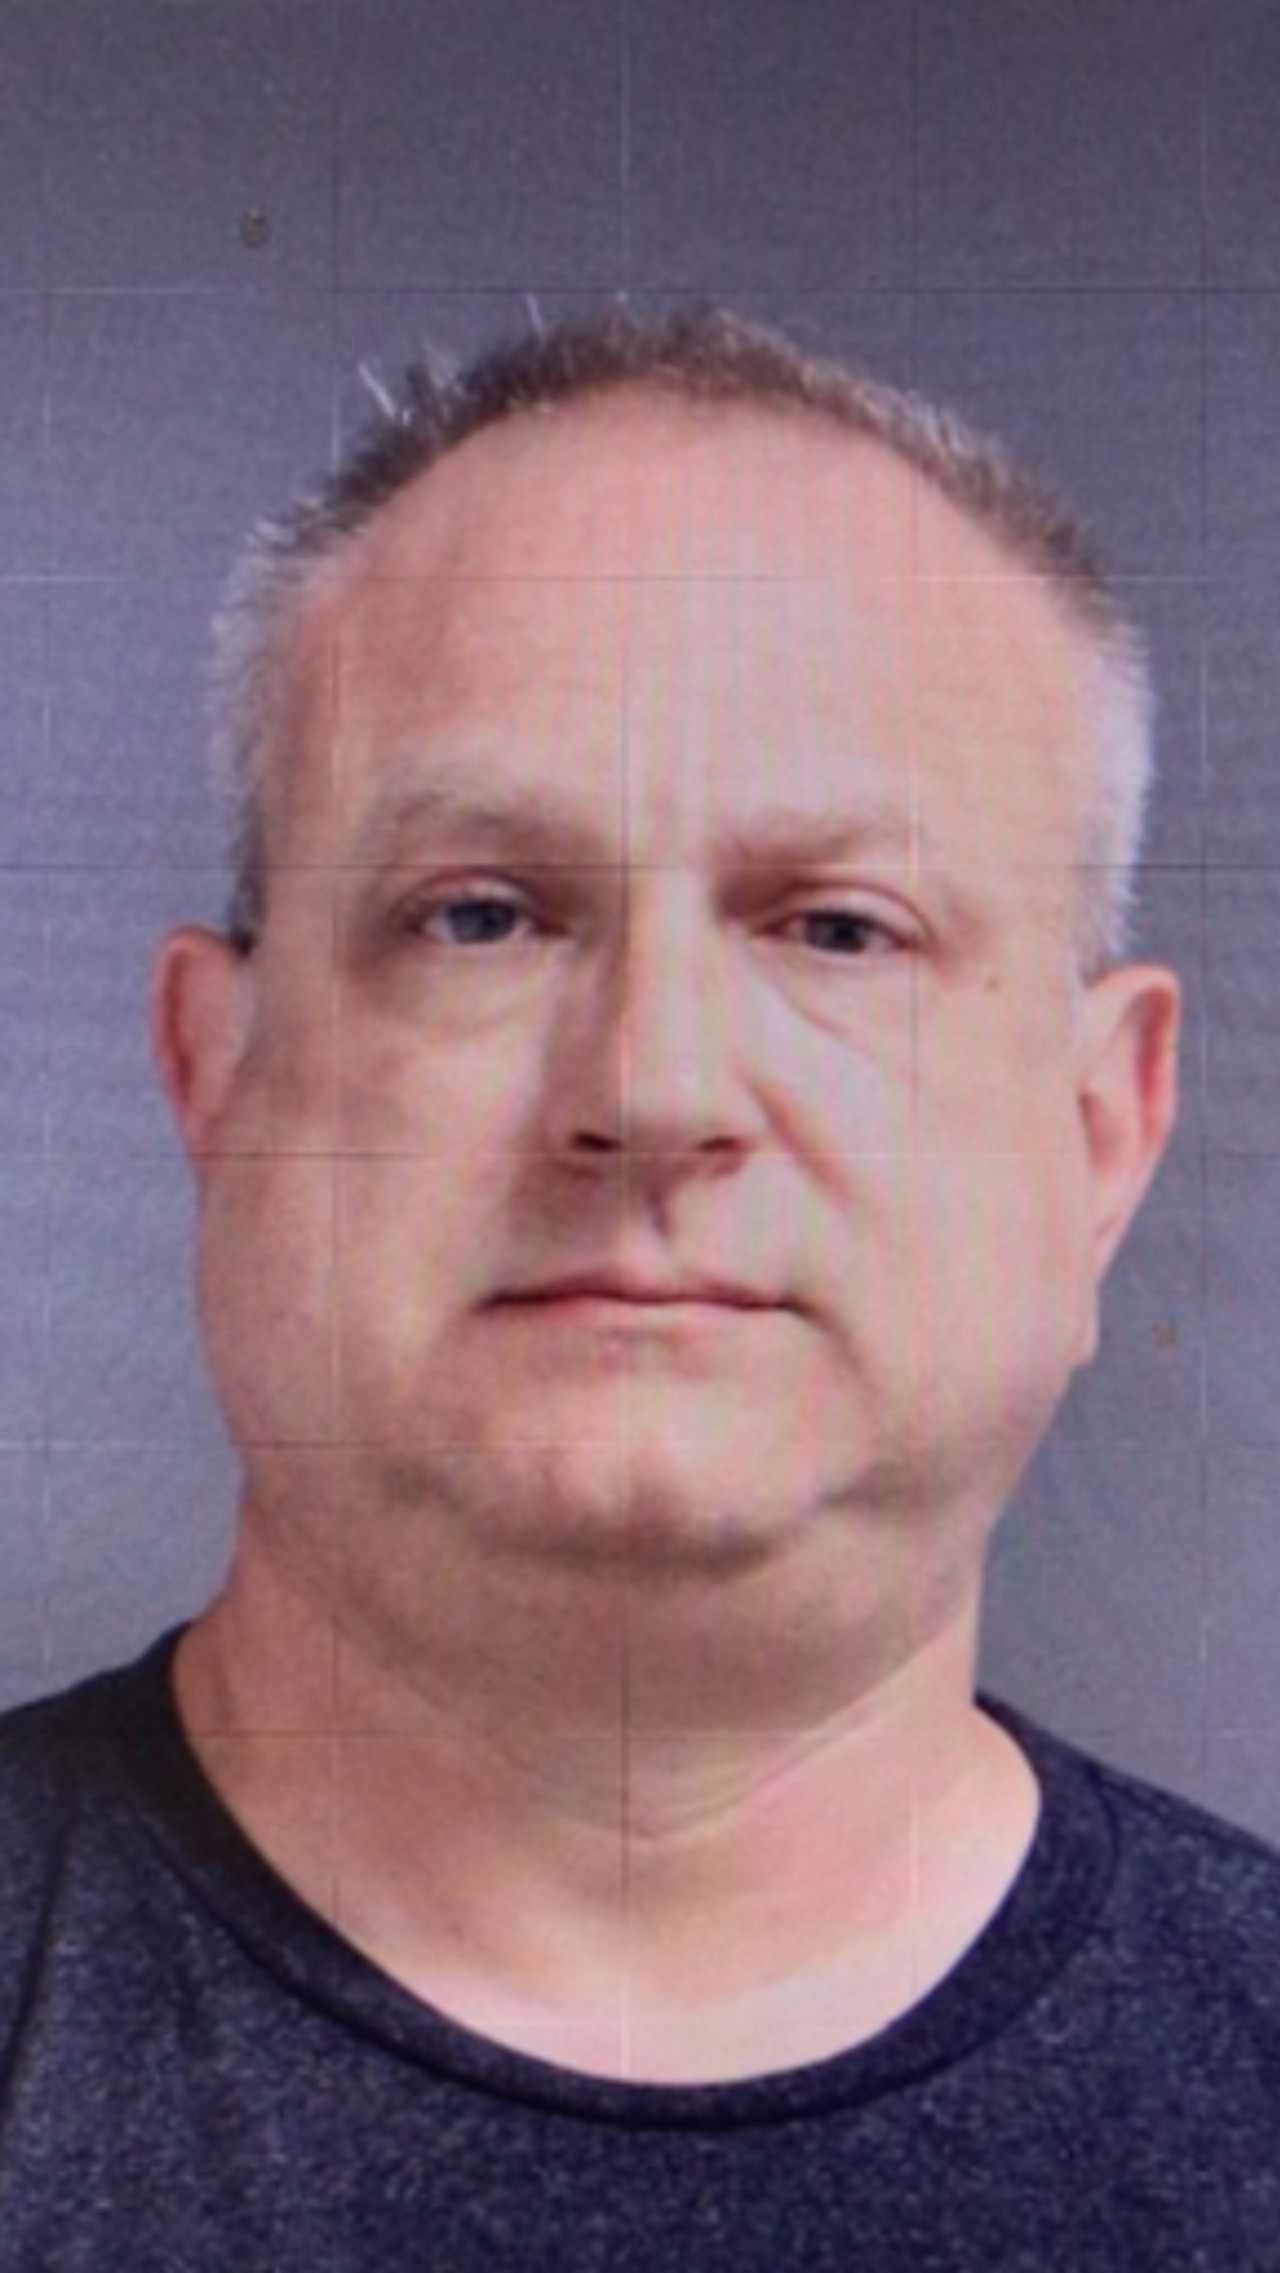 [IMAGE] New York man arrested in 1994 Virginia cold case murder